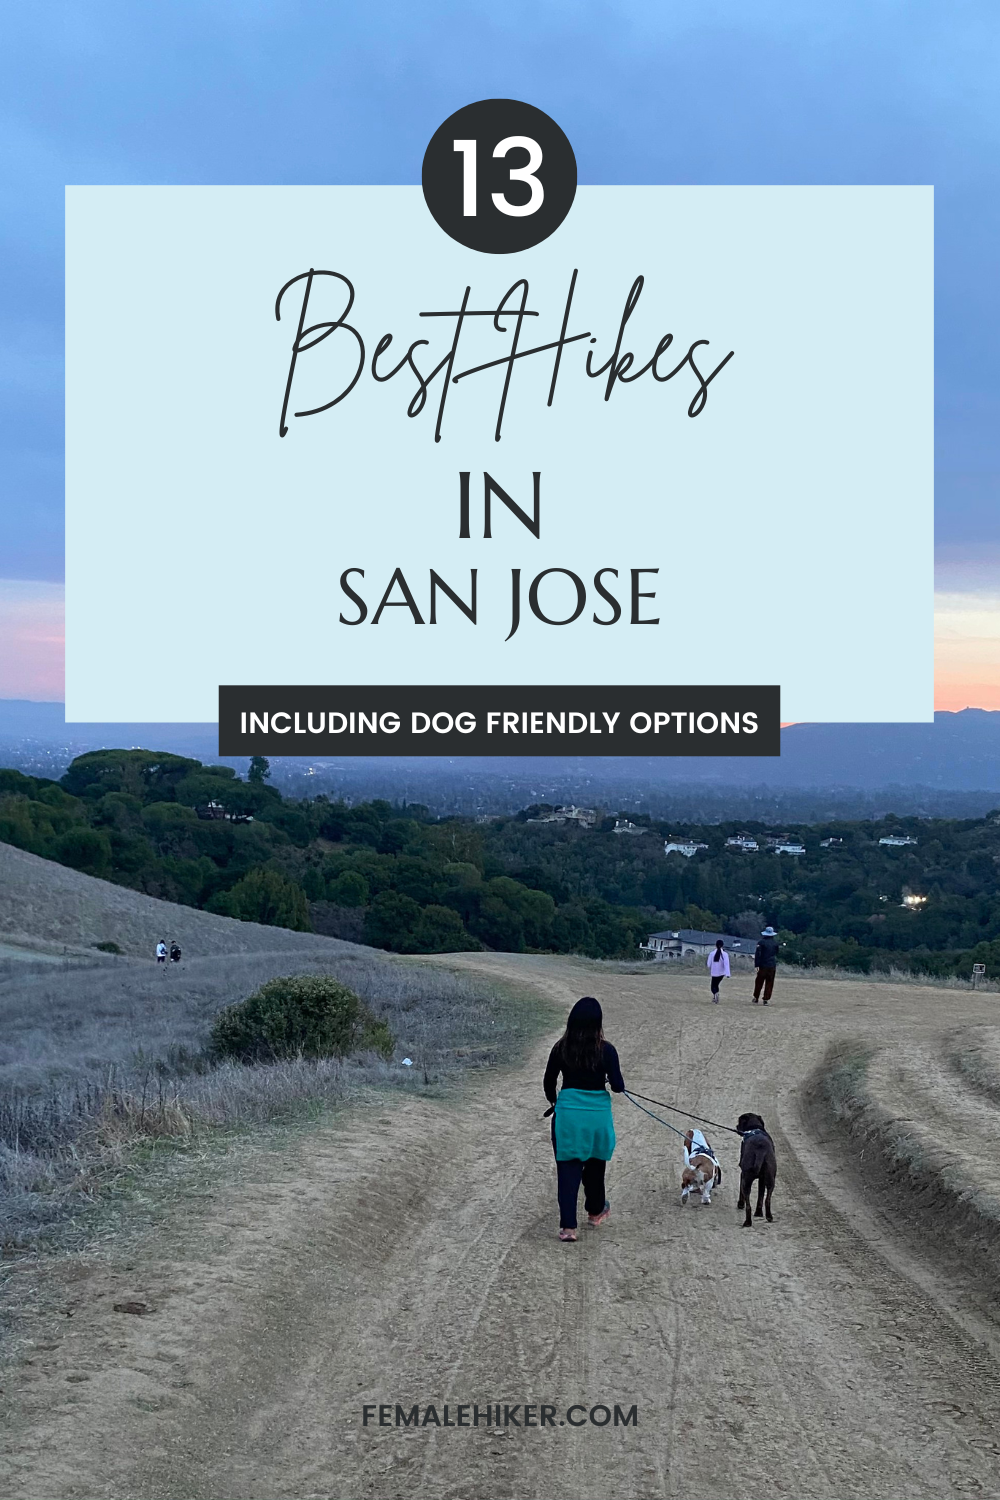 13 best hiking trails in San Jose